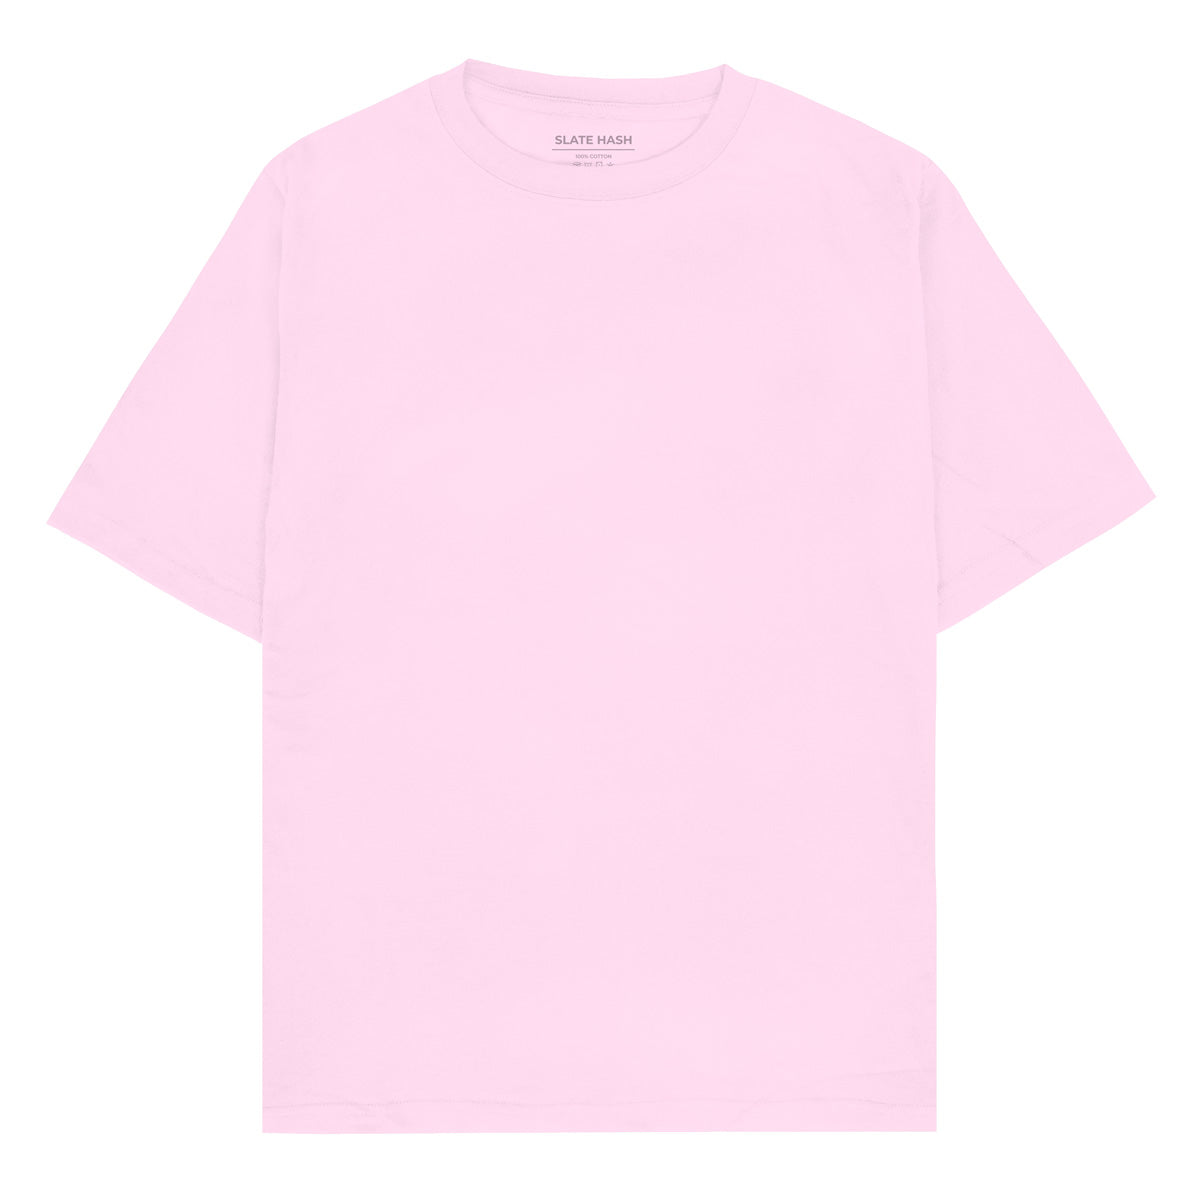 Light Baby Pink Plain Oversized T-shirt – SLATE HASH